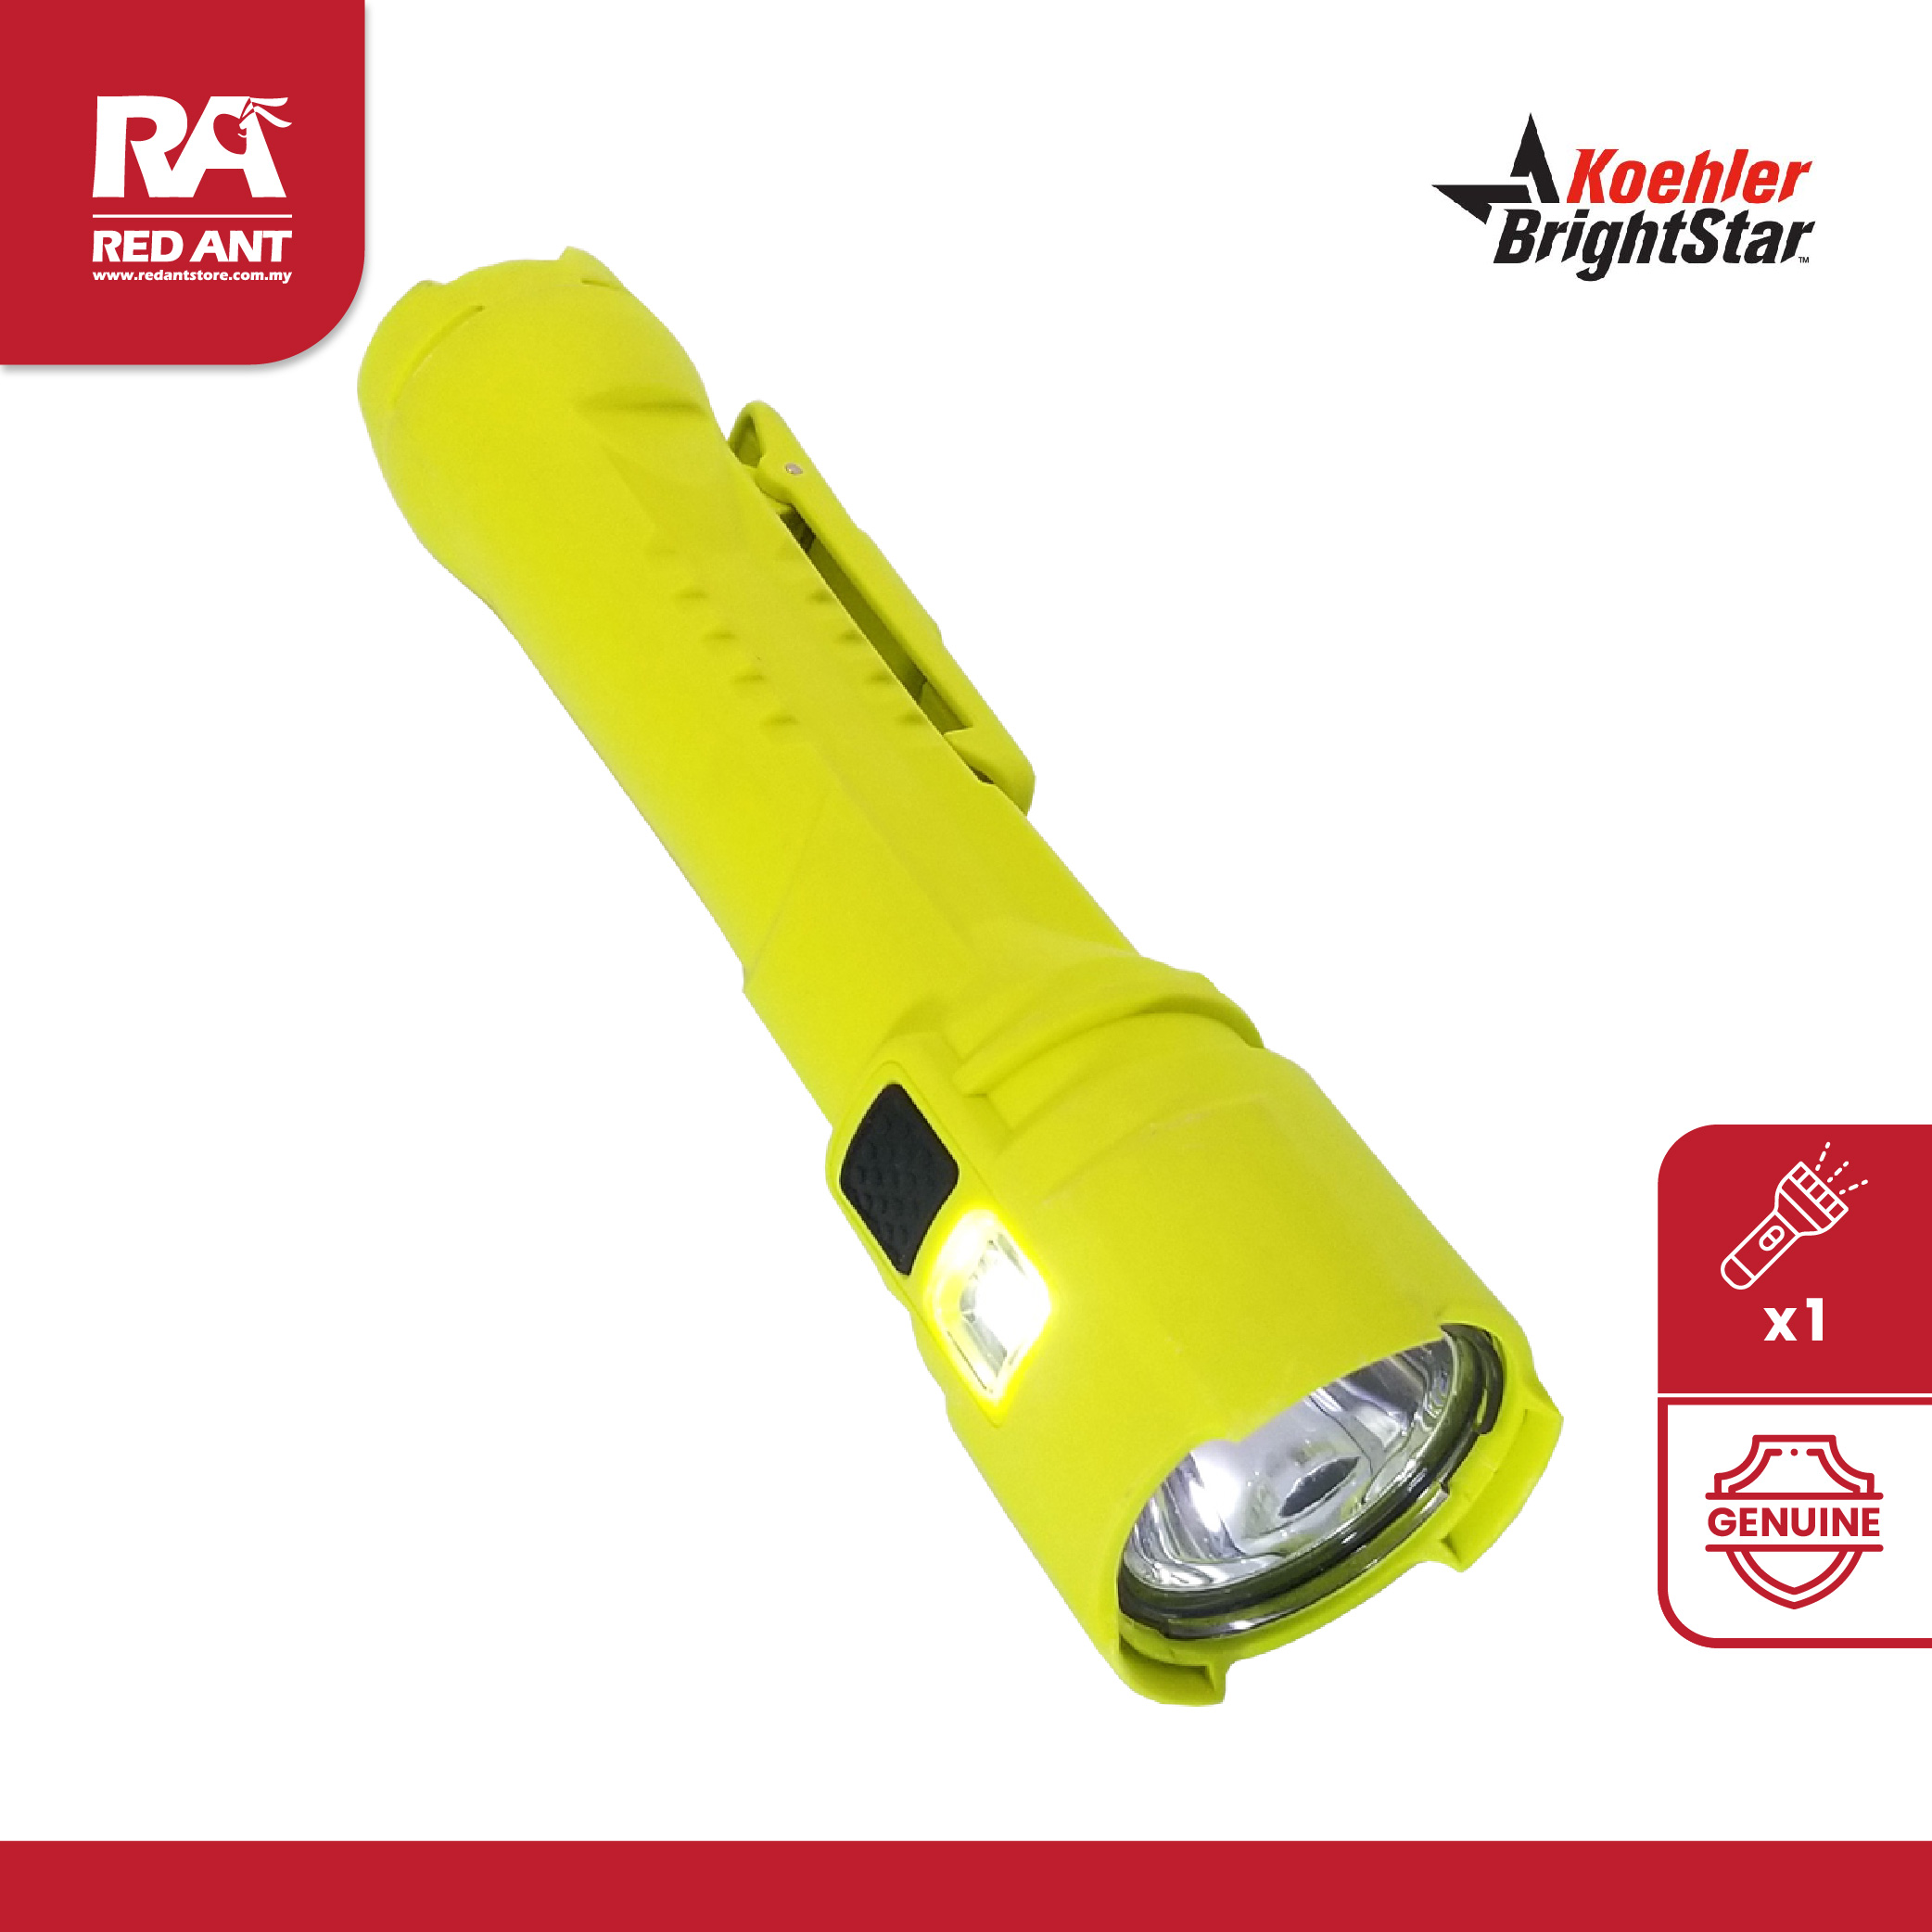 Bright Star Flashlight WorkSafe Intrinsic Razor 3 AA Batteries LED 